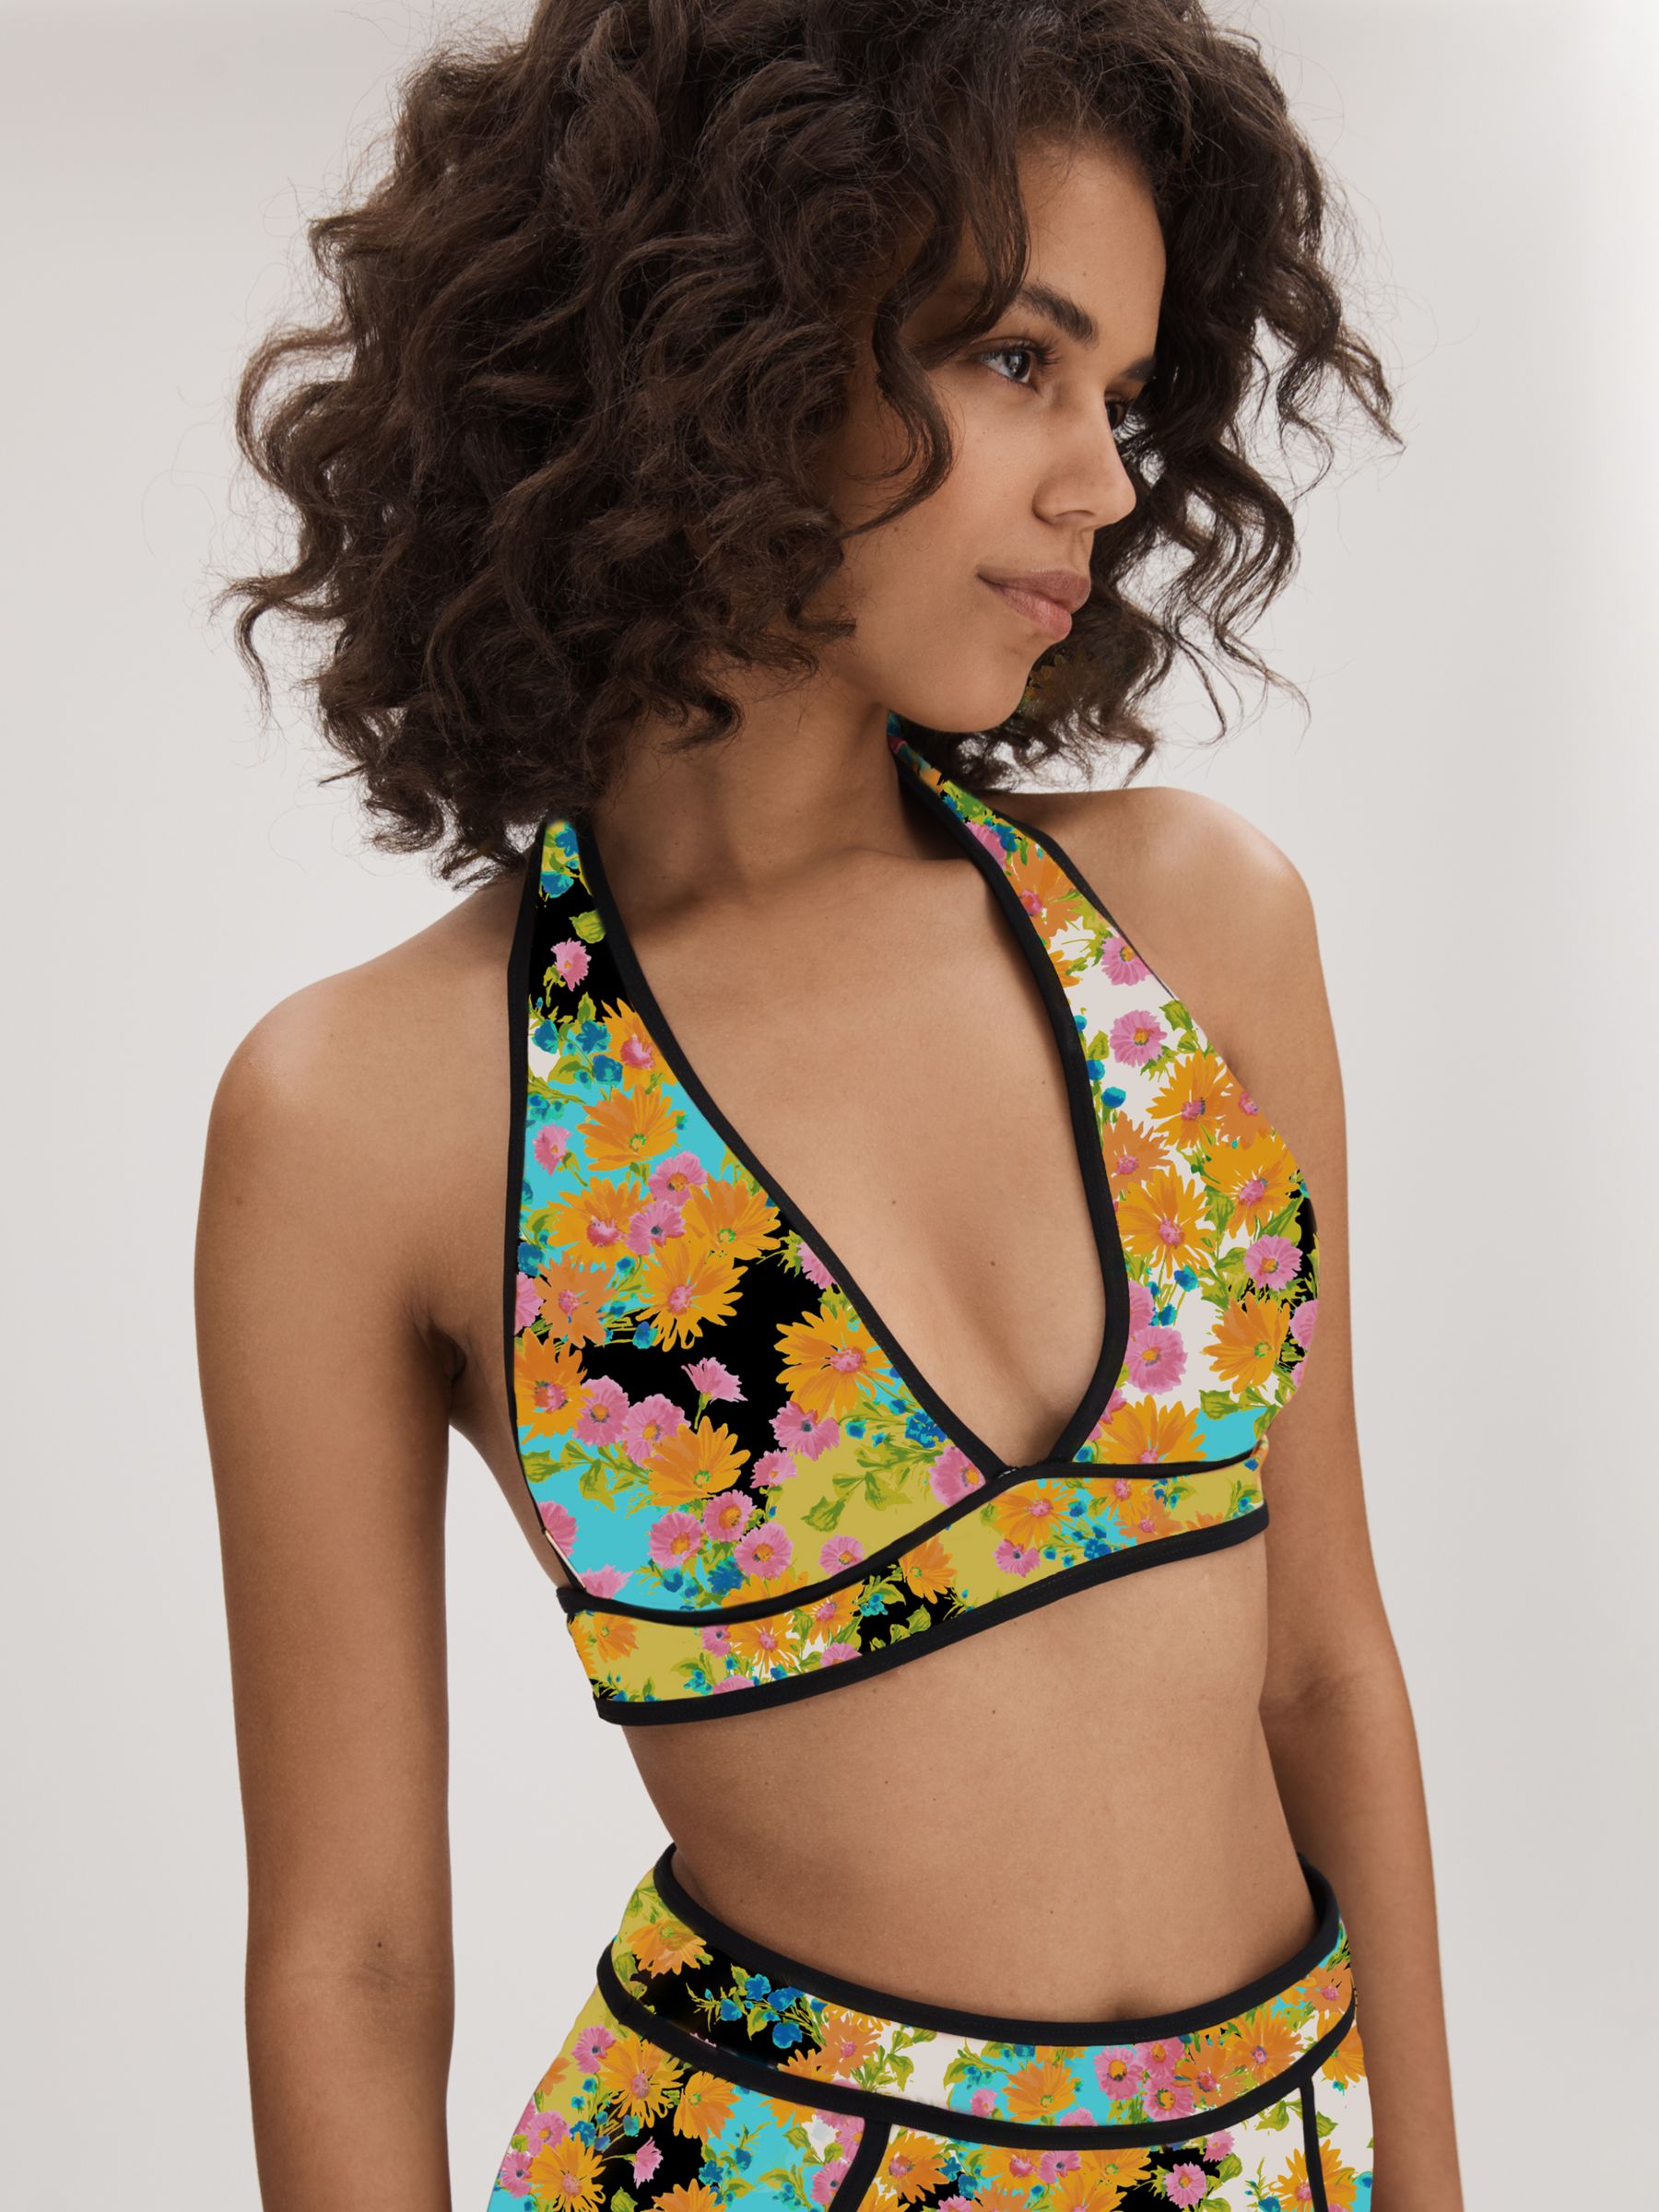 FLORERE Floral Print Halterneck Triangle Bikini Top, Multi, 8